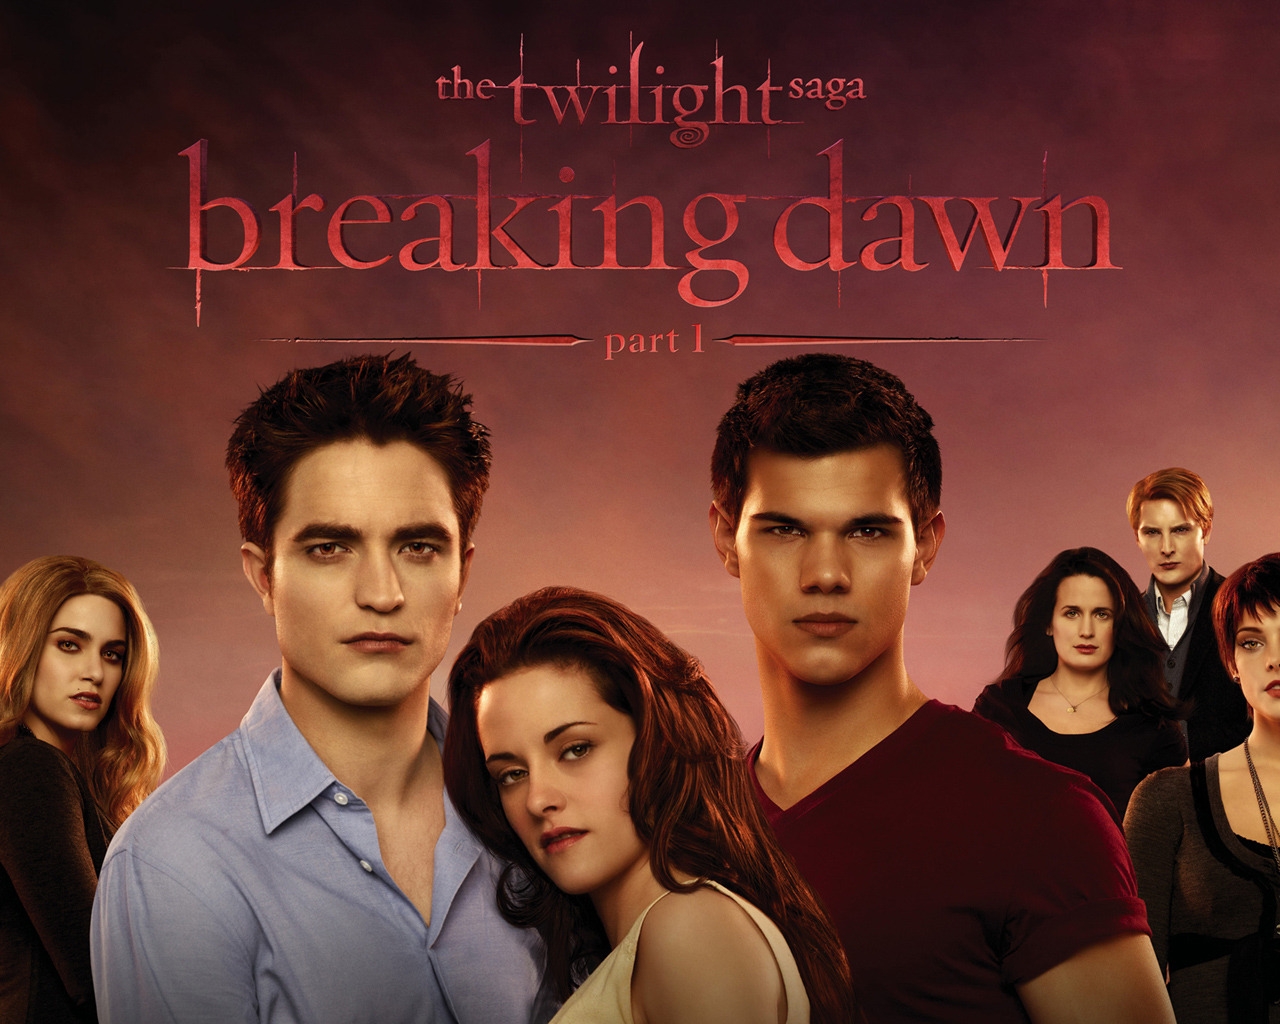 The Twilight Saga Breaking Dawn Part 1 for 1280 x 1024 resolution